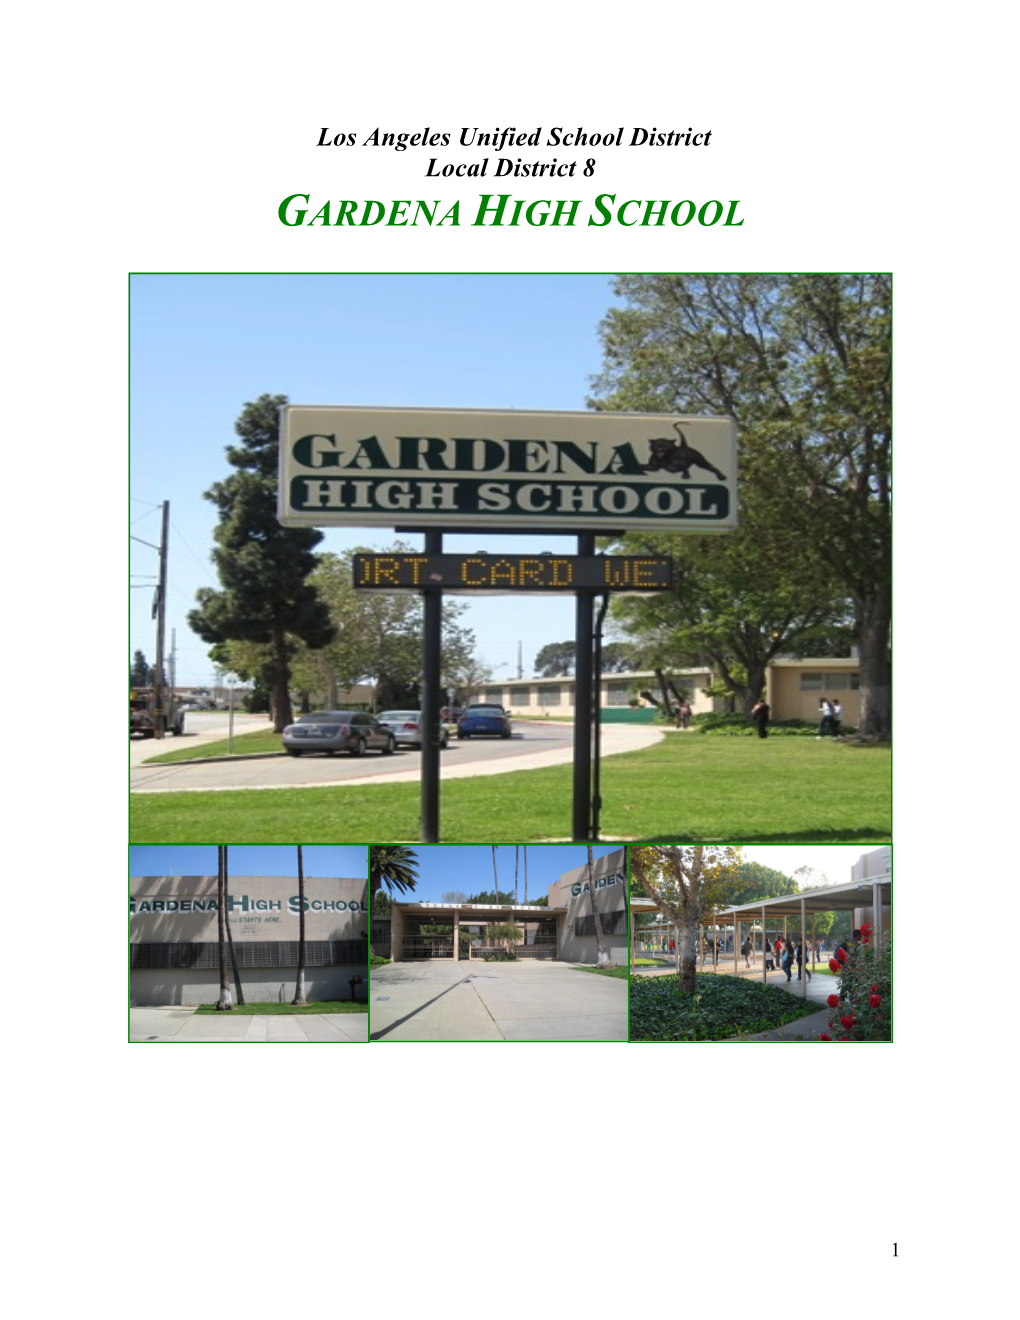 Gardena High School